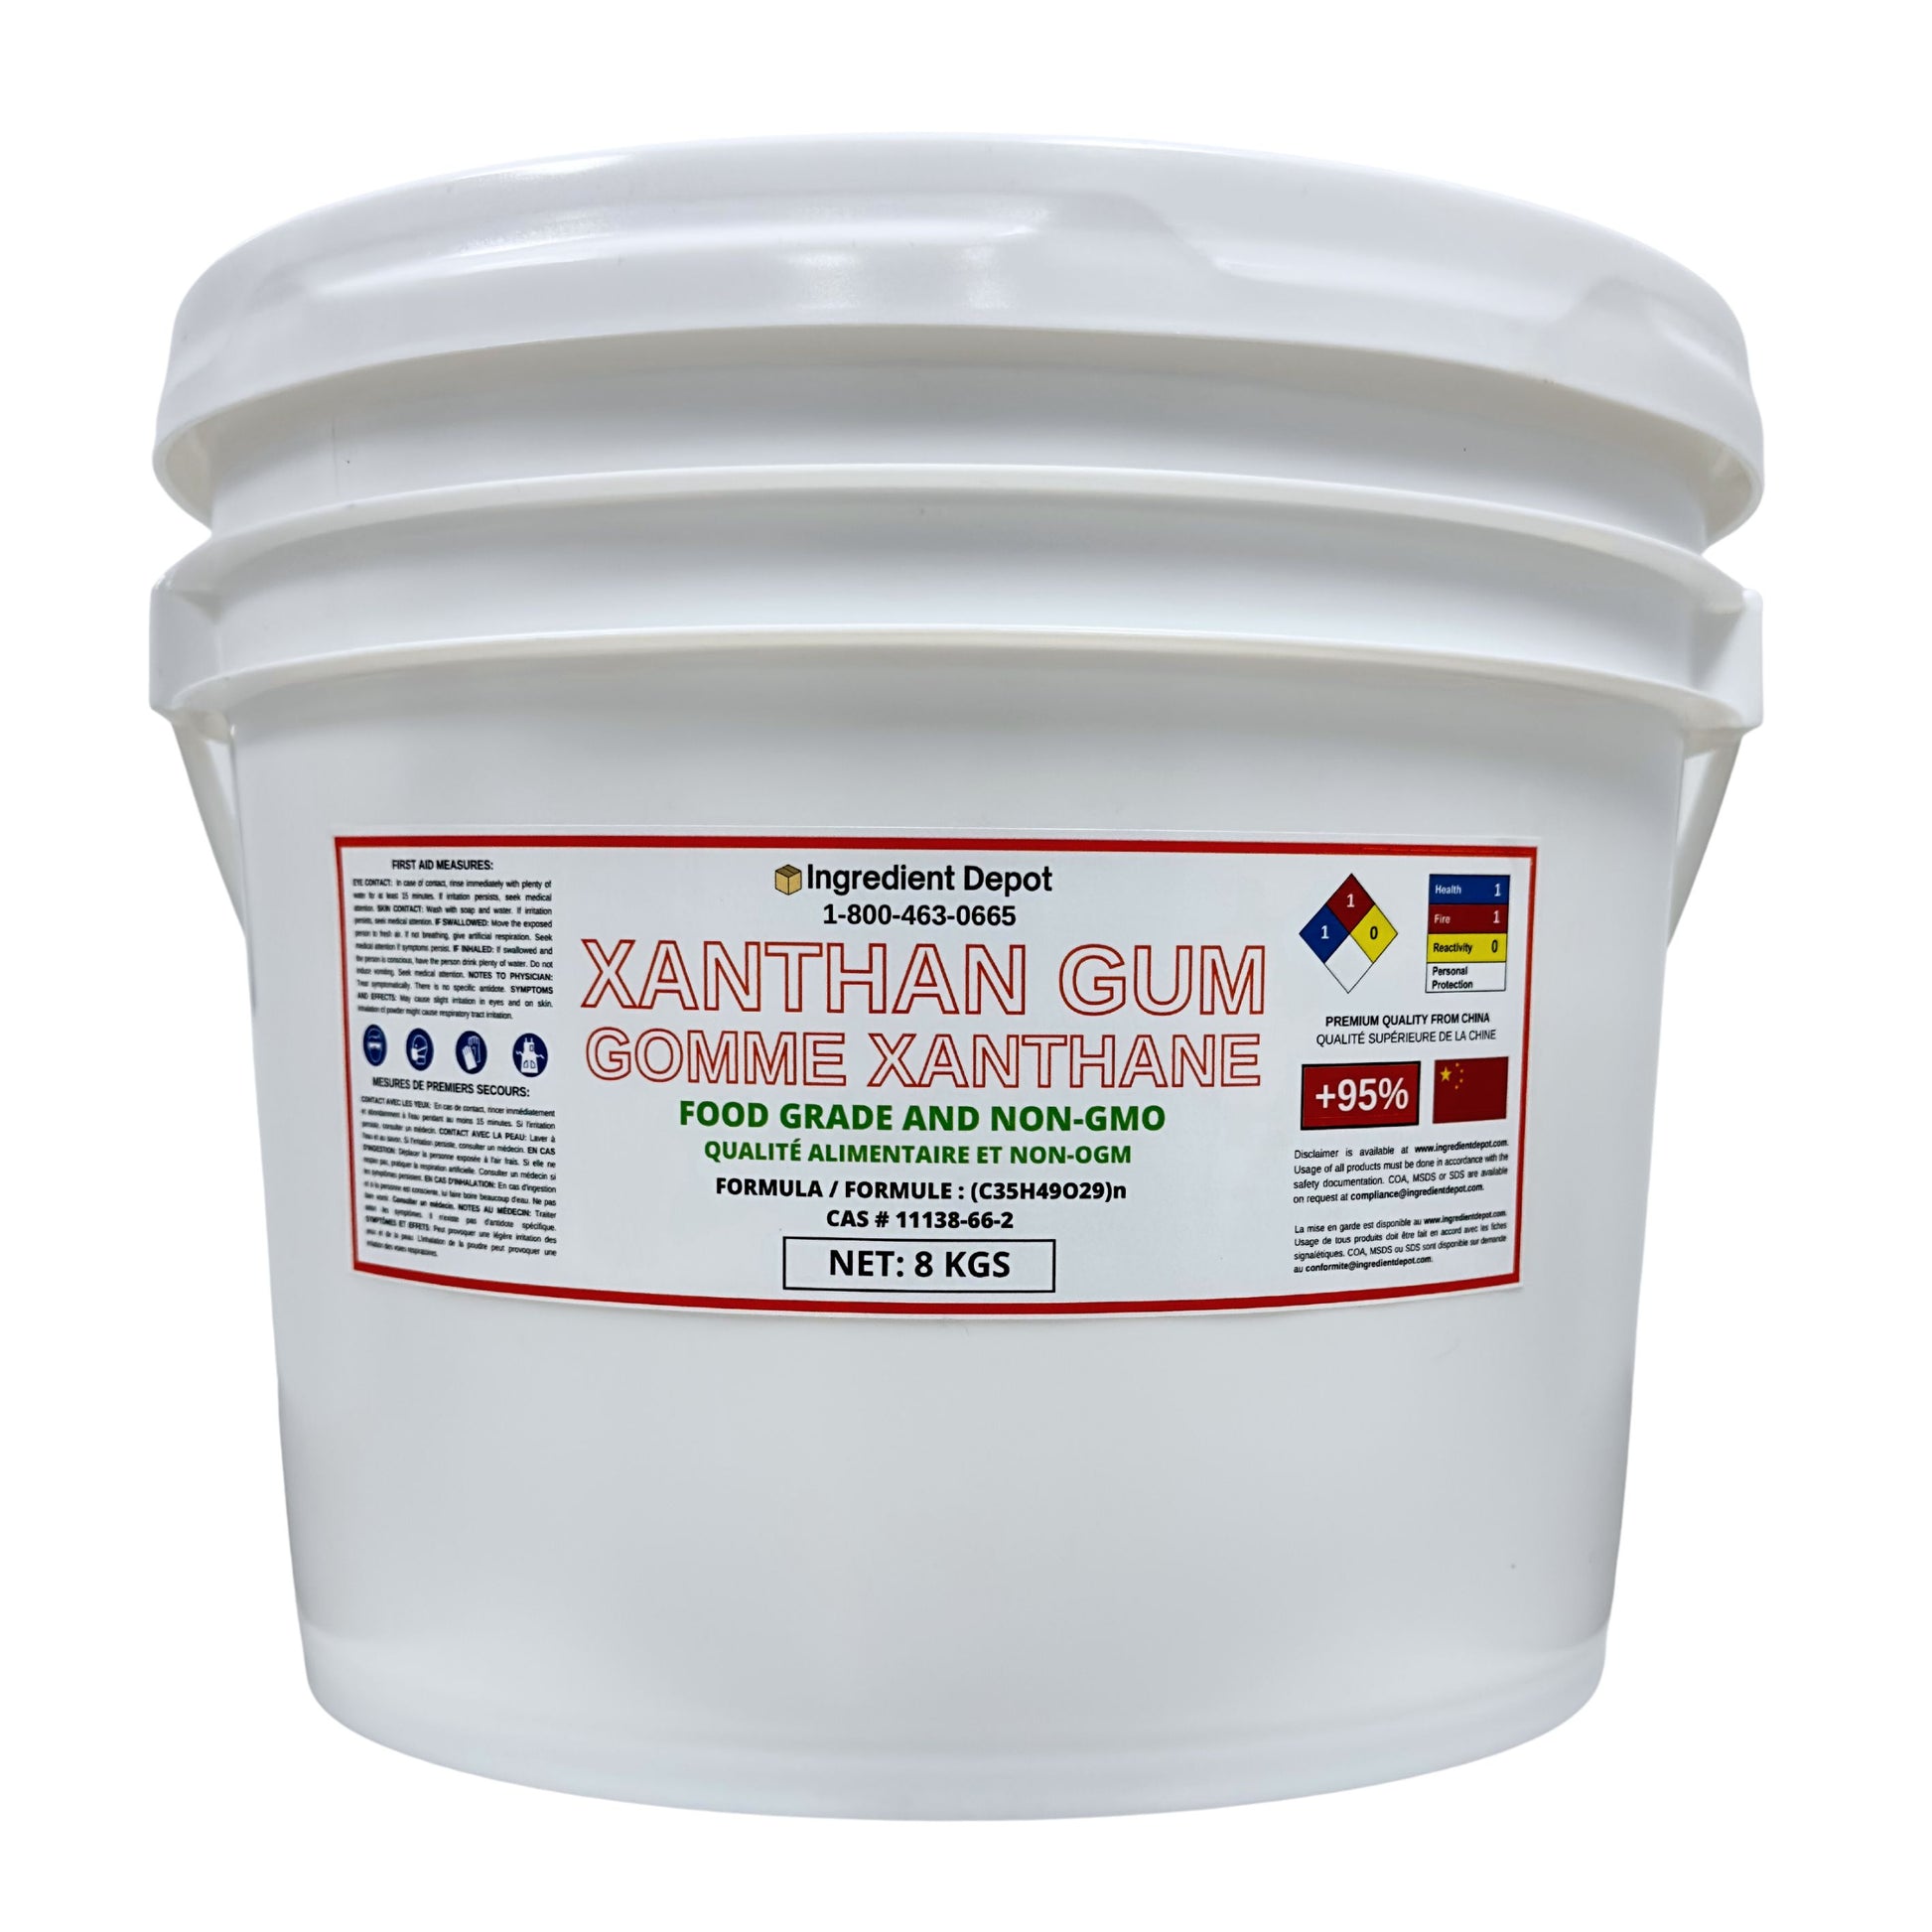 Xanthan Gum Food Grade Non-GMO 8 kgs - IngredientDepot.com